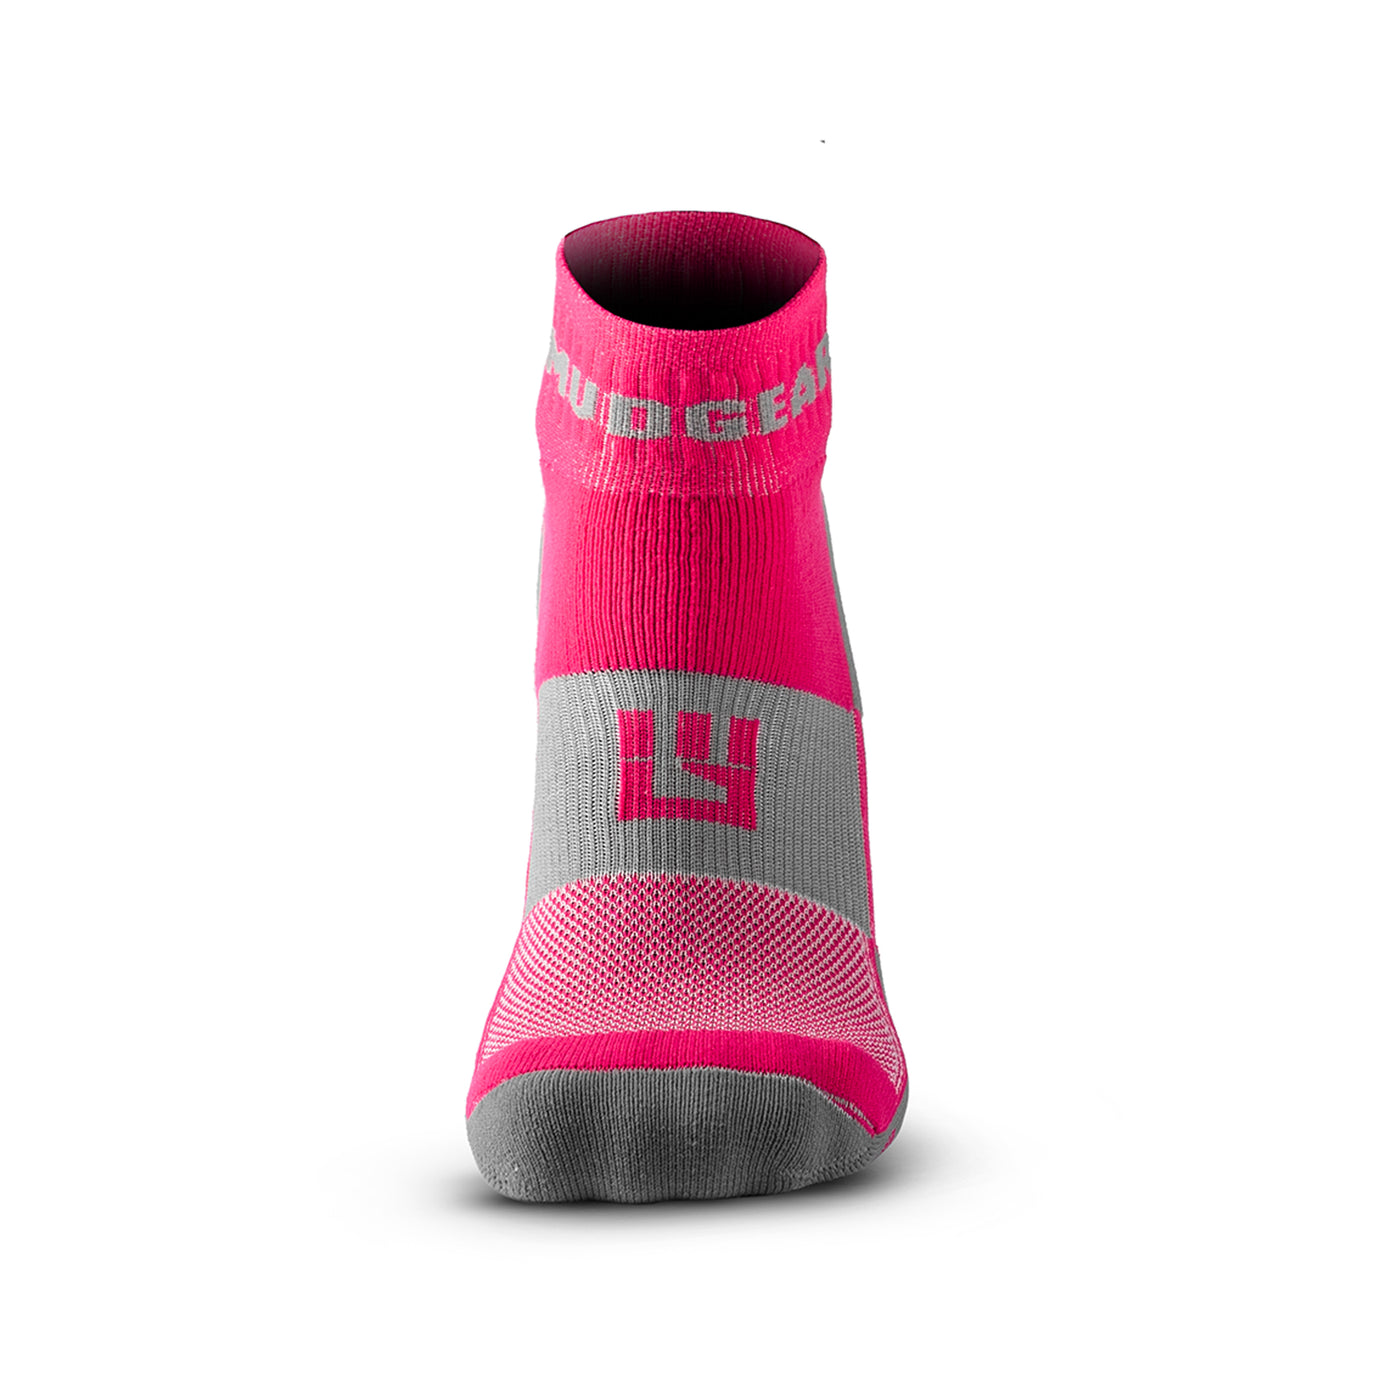 MudGear Pink Gray Quarter Crew socks for women